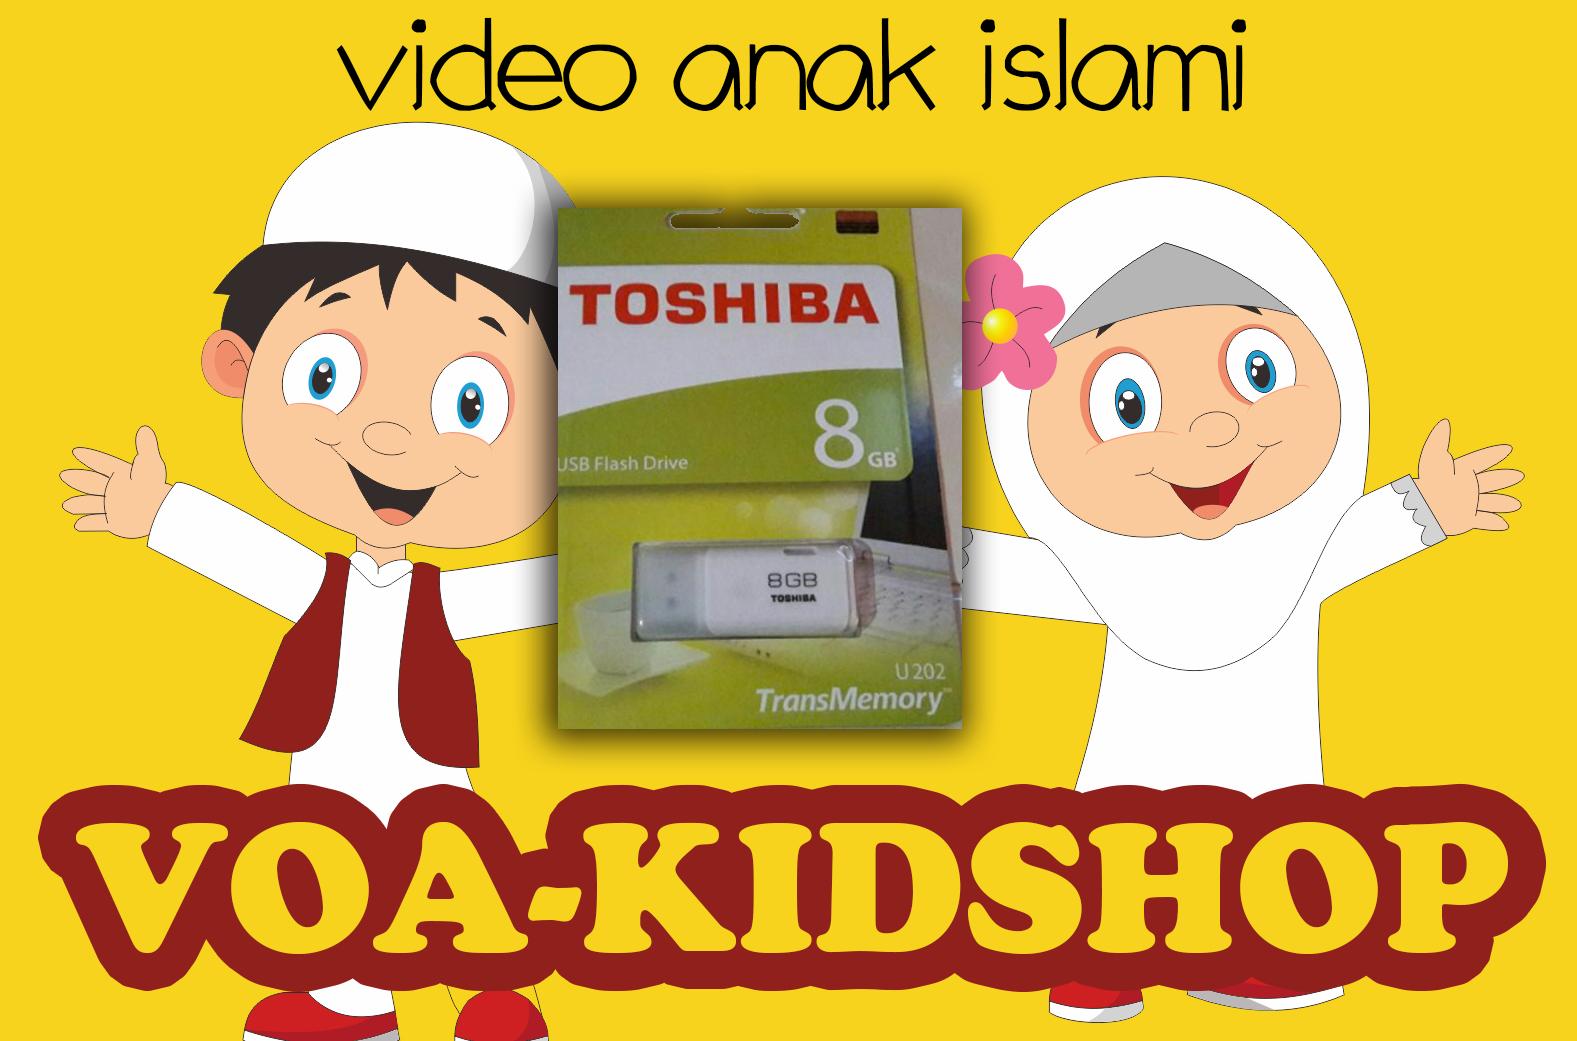 FLASHDISK VIDEO ANAK ISLAM Solusi Video Mendidik Anak Islami VOA